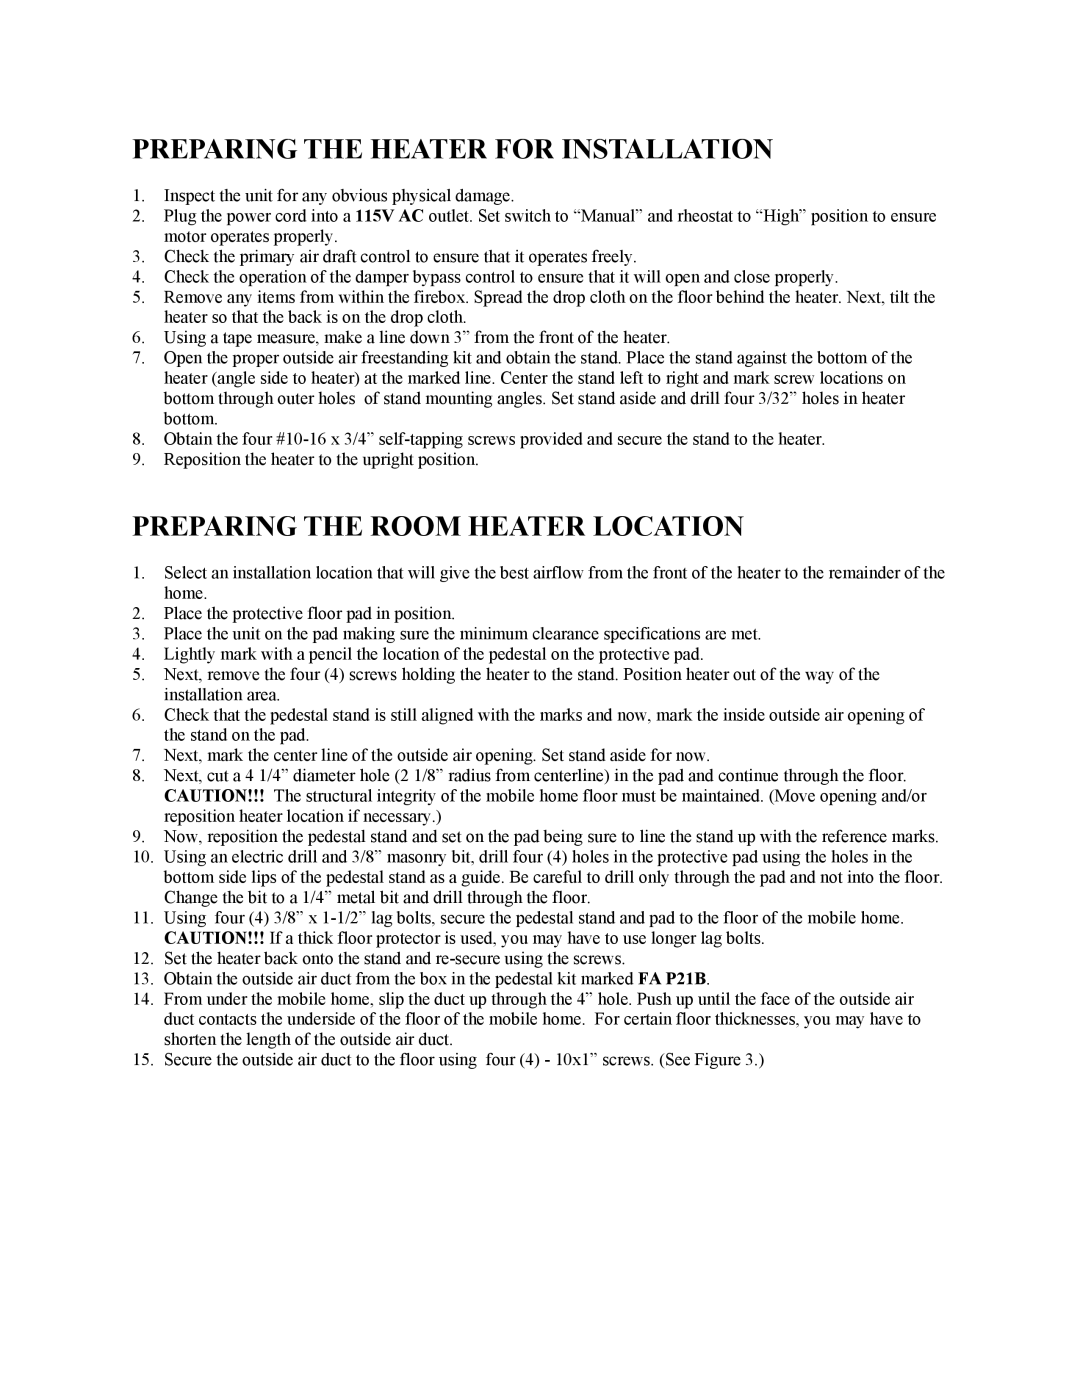 New Buck Corporation 20 Room Heater manual Preparing The Heater For Installation, Preparing The Room Heater Location 